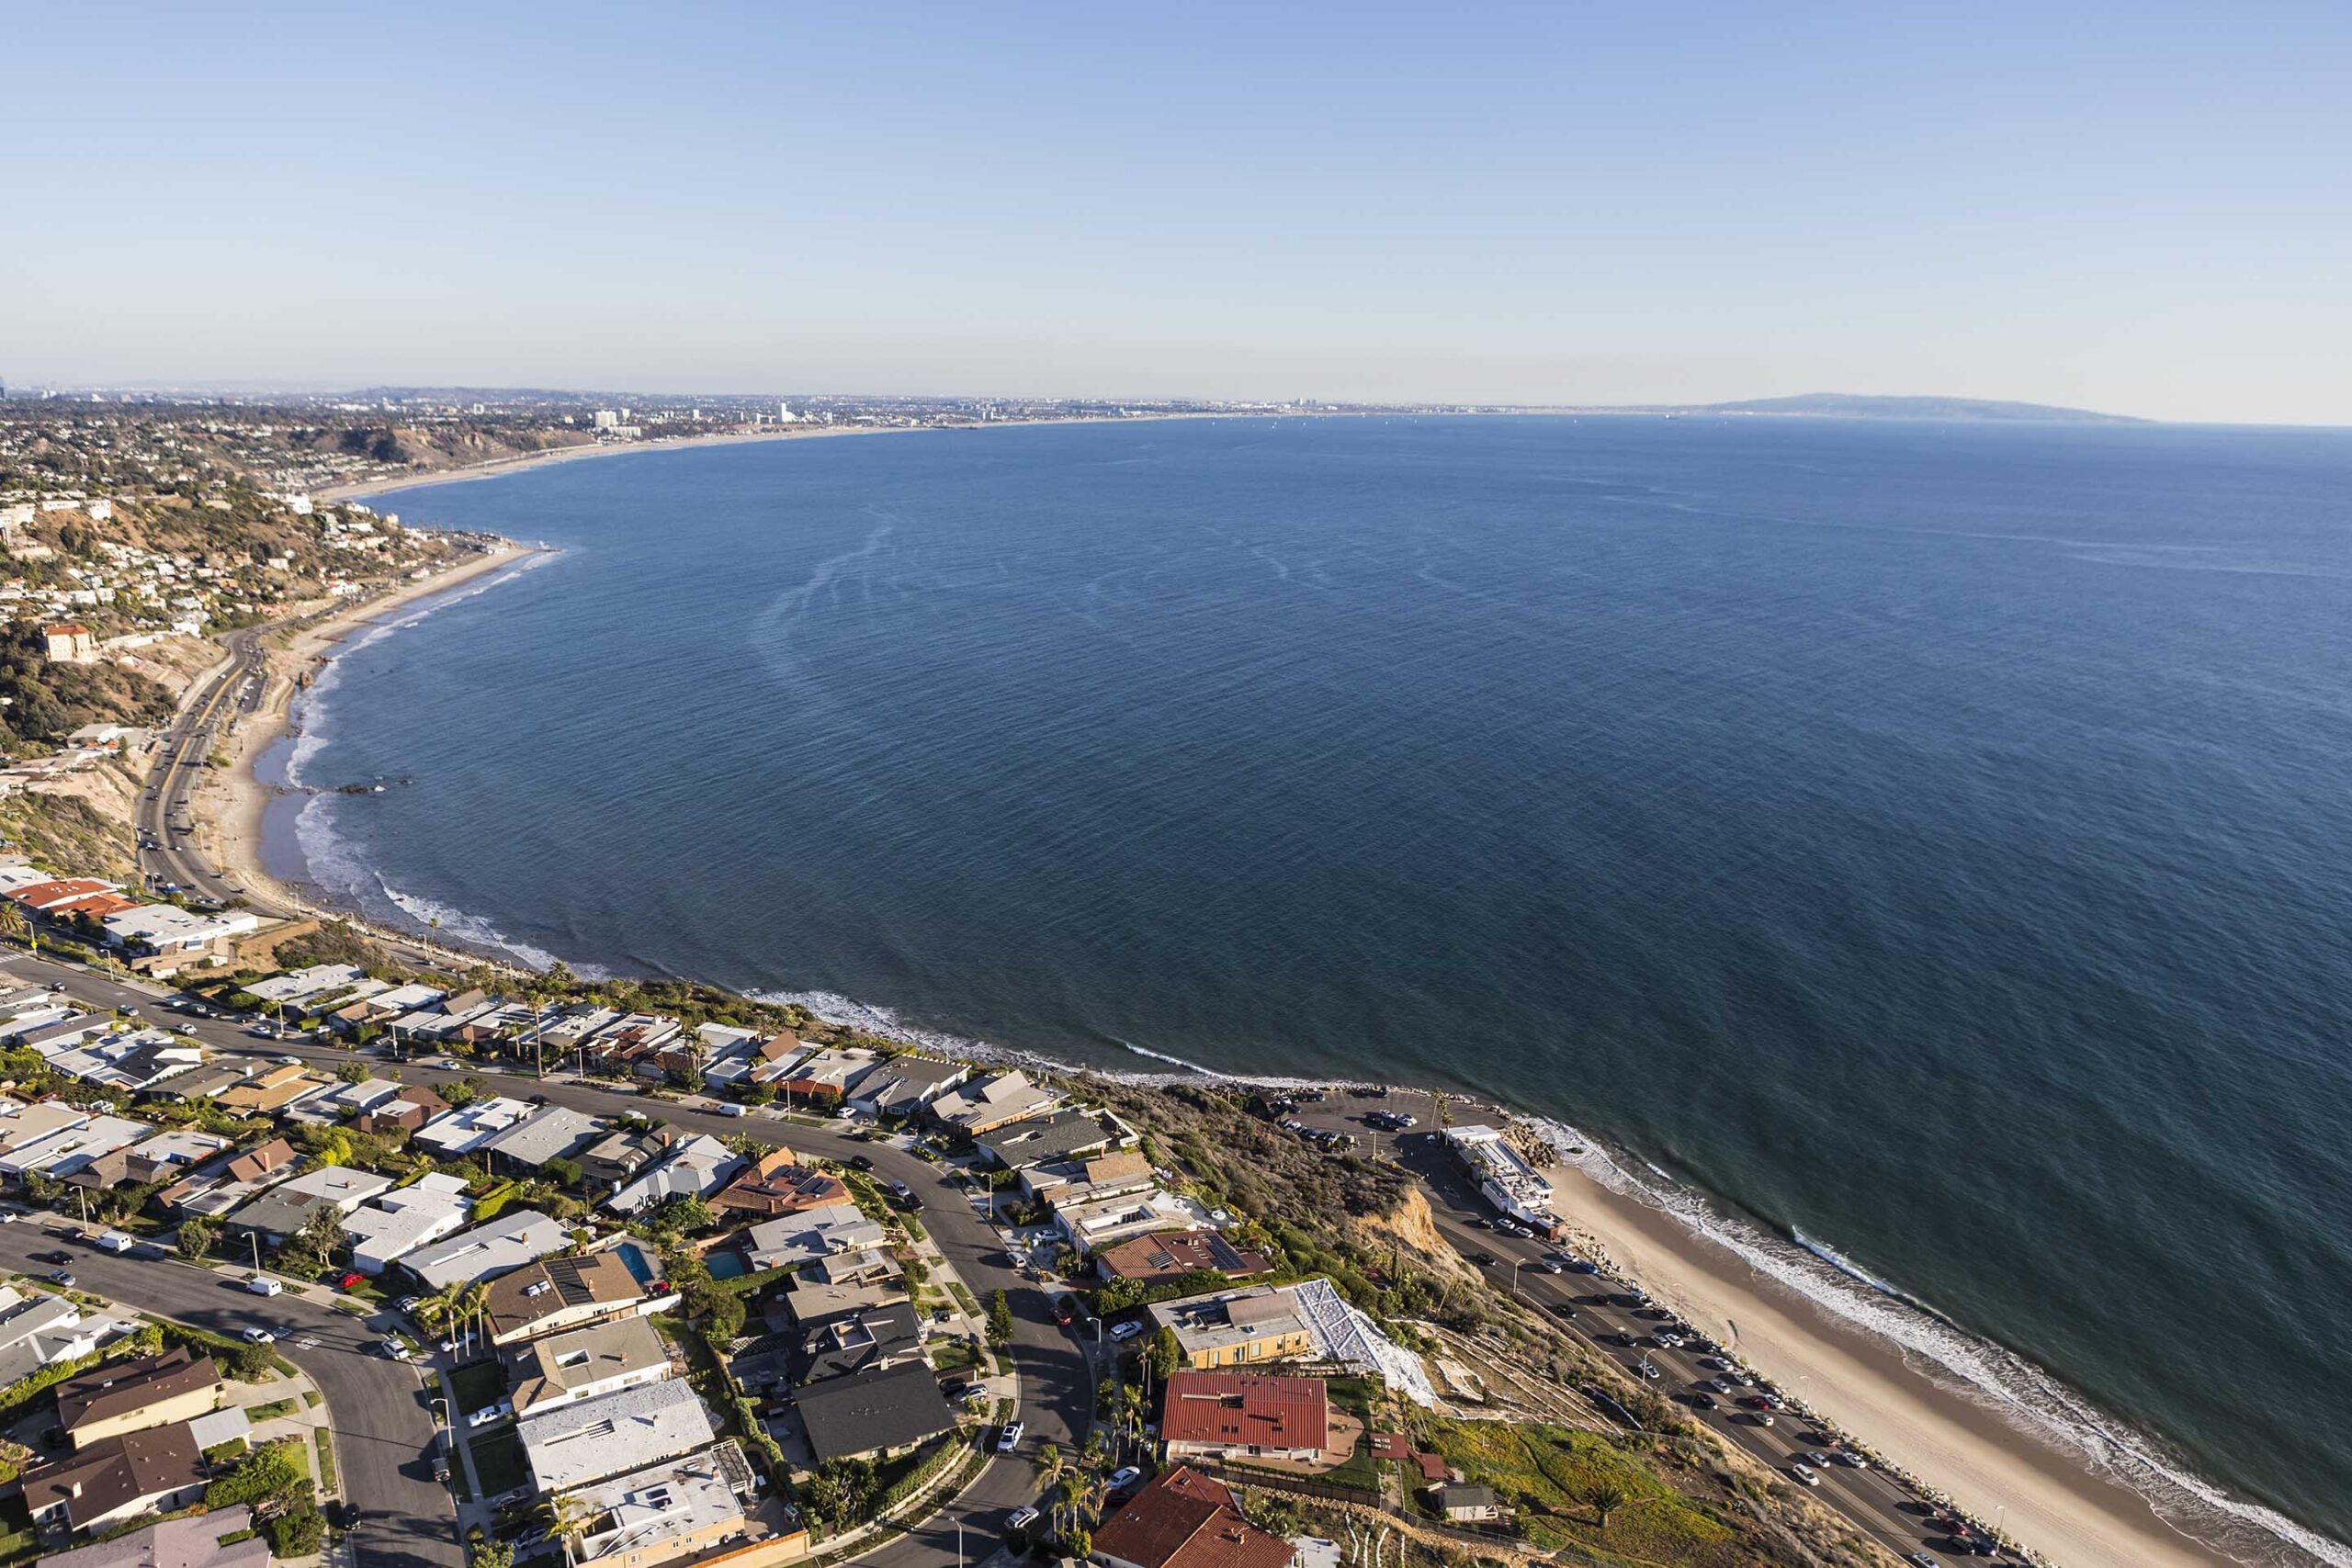 Pacific Palisades ocean view homes overlooking Santa Monica Bay in Los Angeles, California.